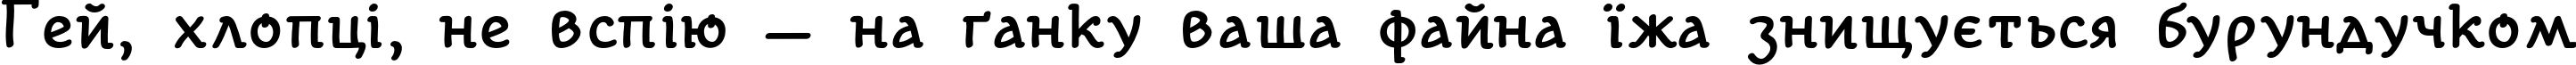 Пример написания шрифтом Kotyhoroshko Bold текста на украинском